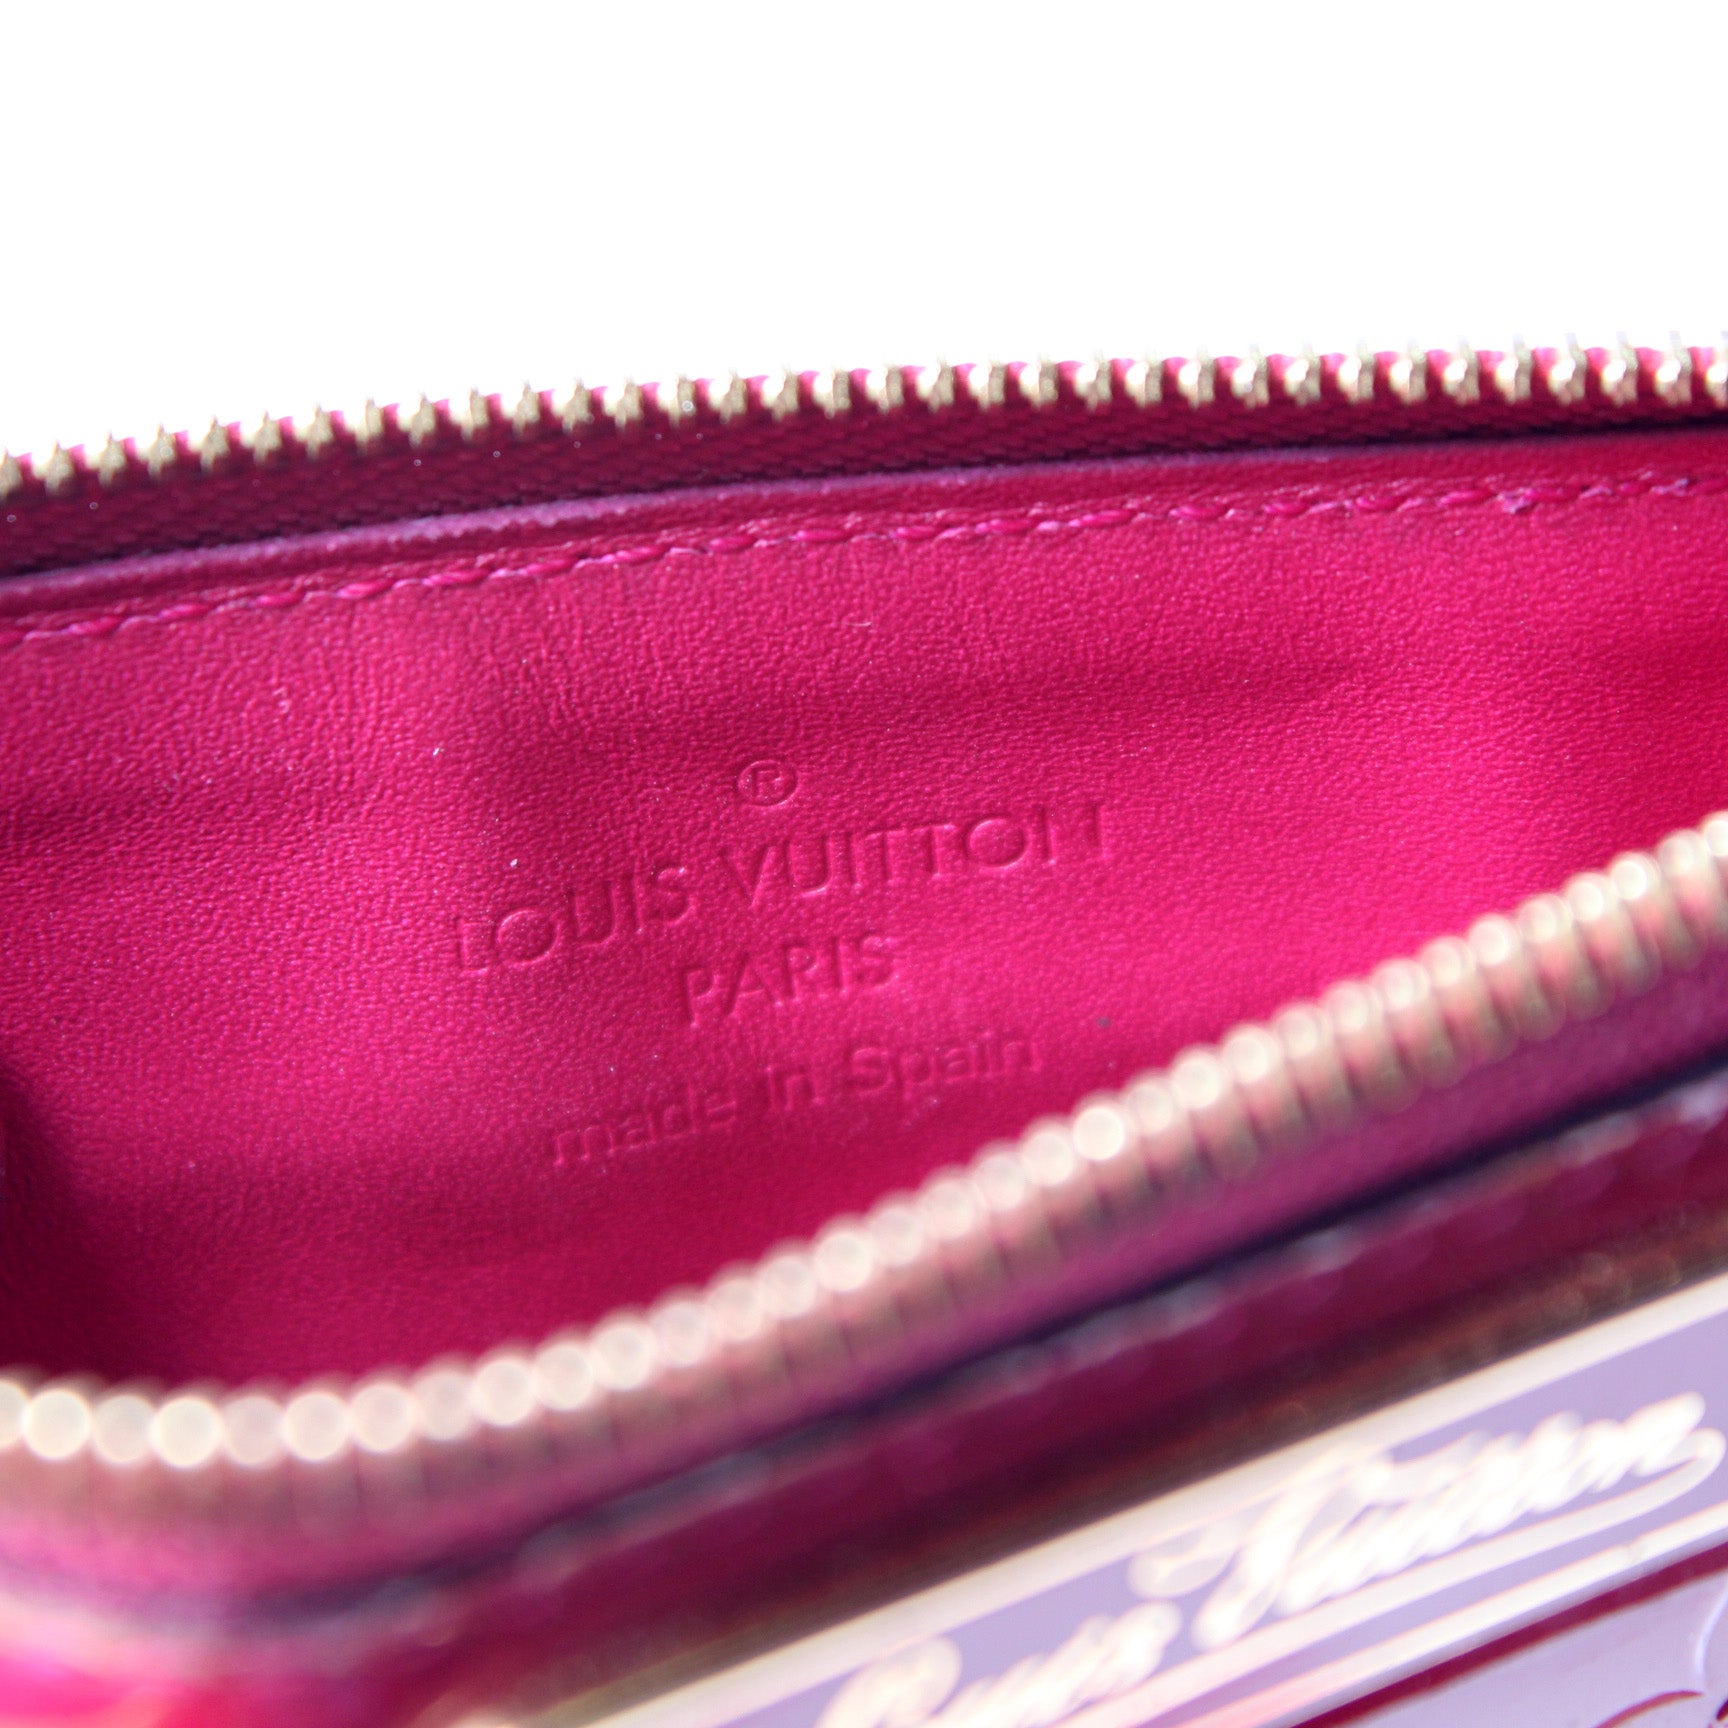 Louis Vuitton Vernis Key Pouch – SFN